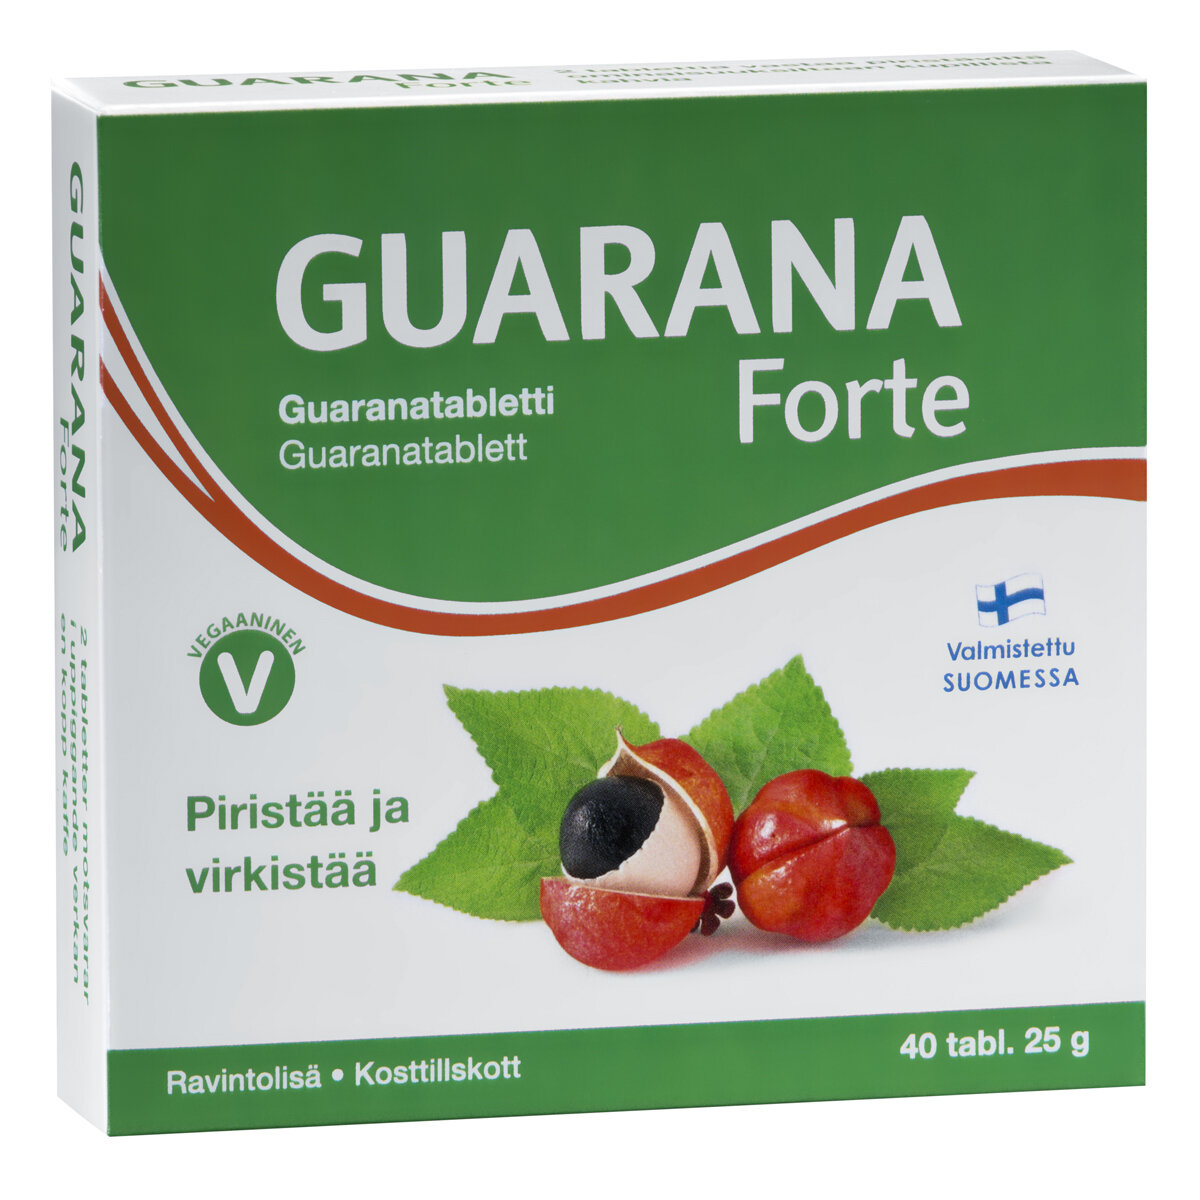 Guarana Forte 40 tab